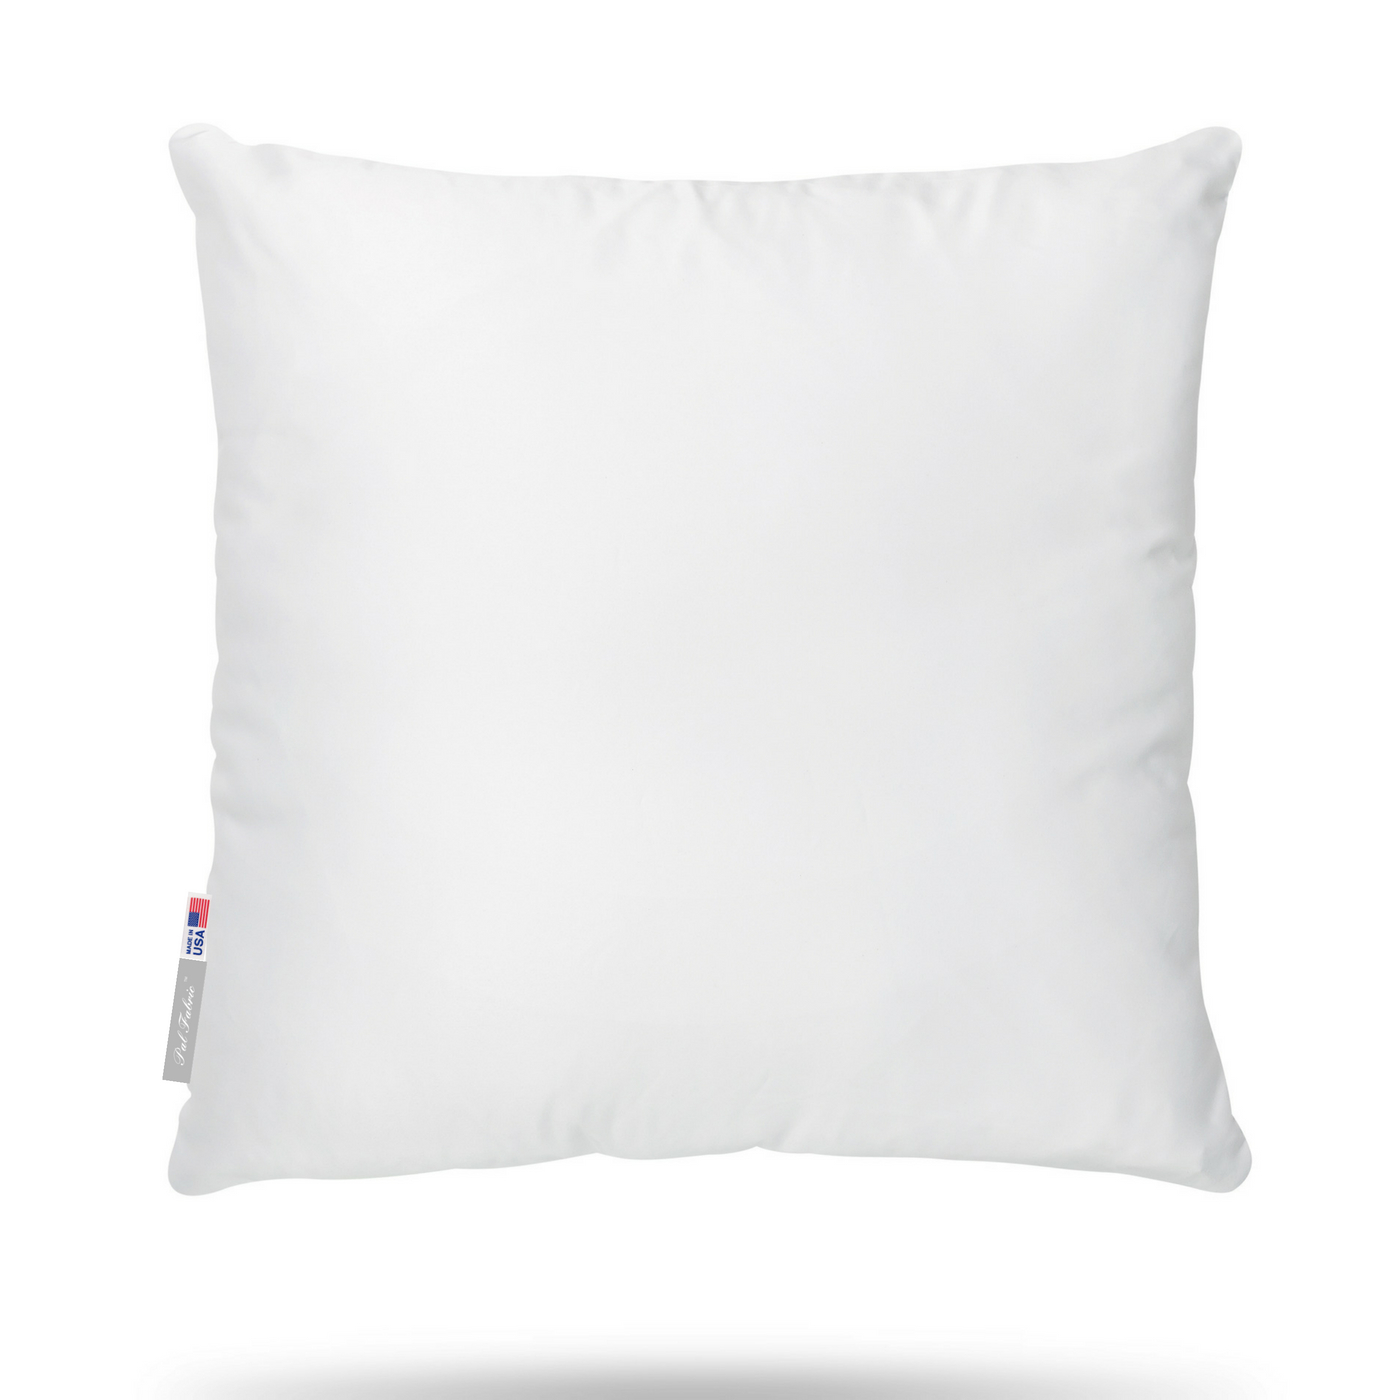 Premium 26X26 White Cotton Feel MicroFiber Square Sham Euro Sofa Bed Couch Decorative Pillow Insert 